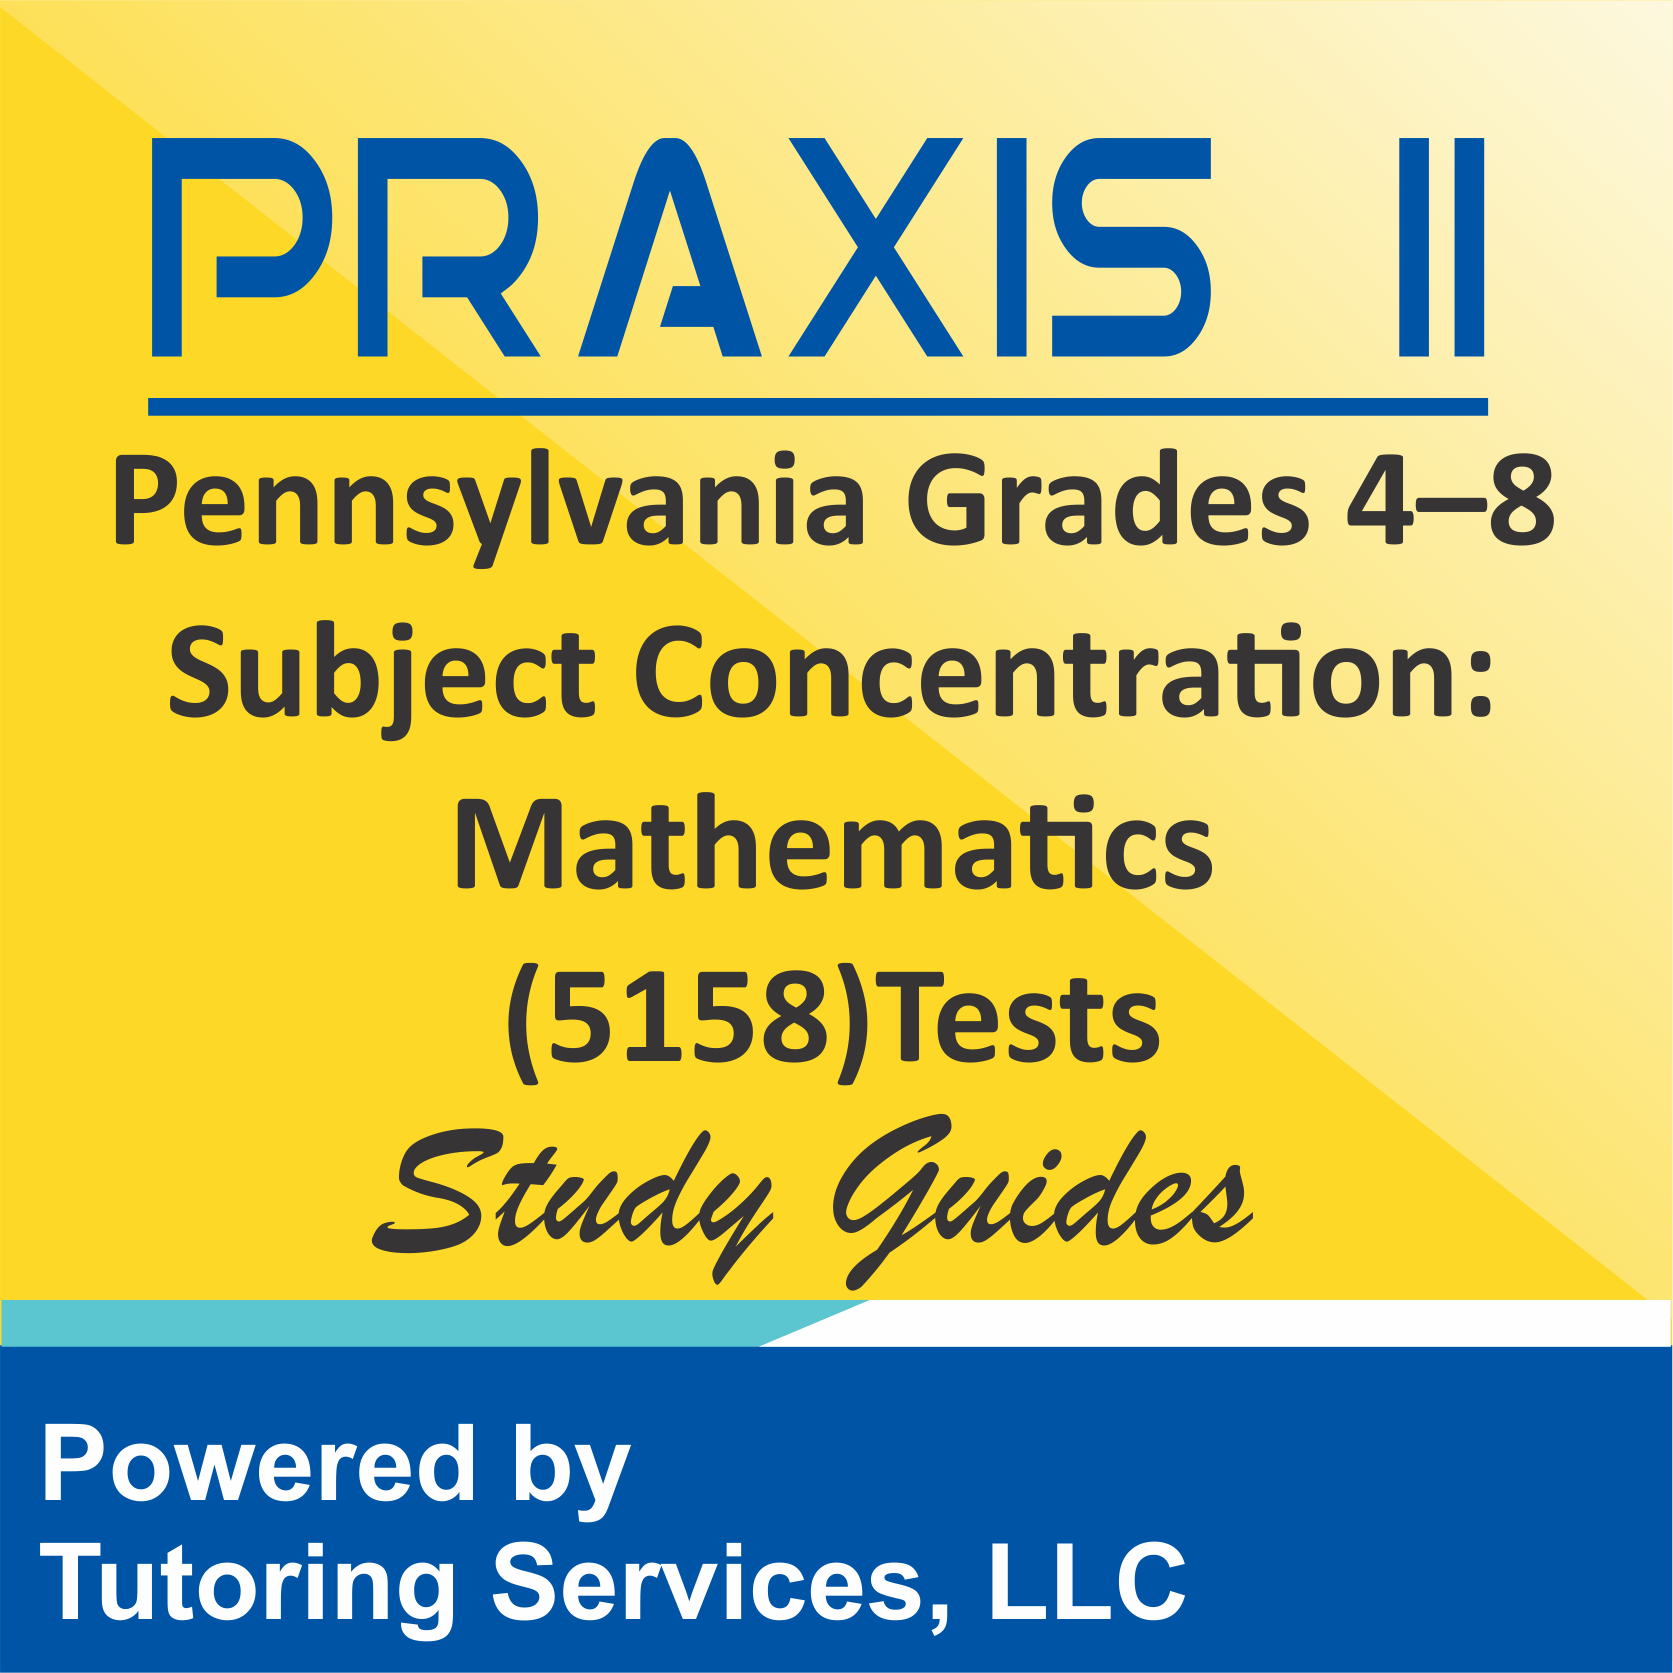 Praxis II Pennsylvania Grades 4-8 Subject Concentration: Mathematics (5158) Test